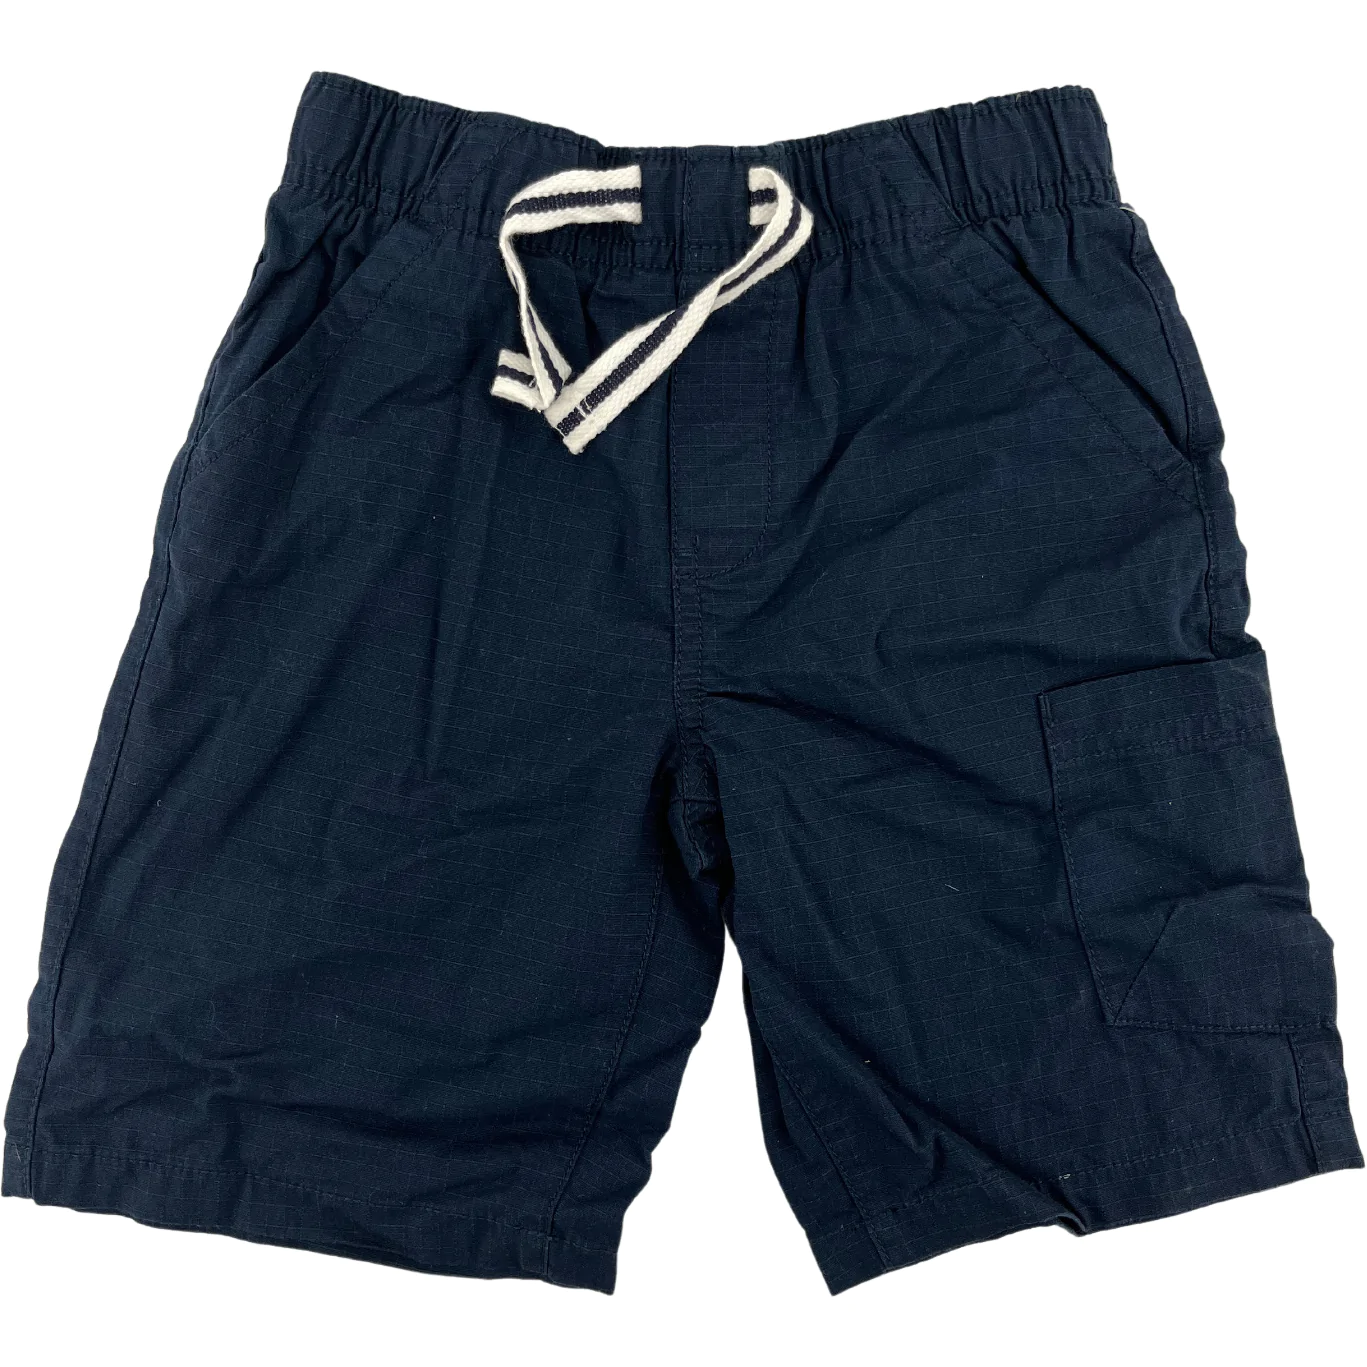 Toughskins Children's Shorts / Boy's Cargo Shorts / Navy / Size Medium (5/6)